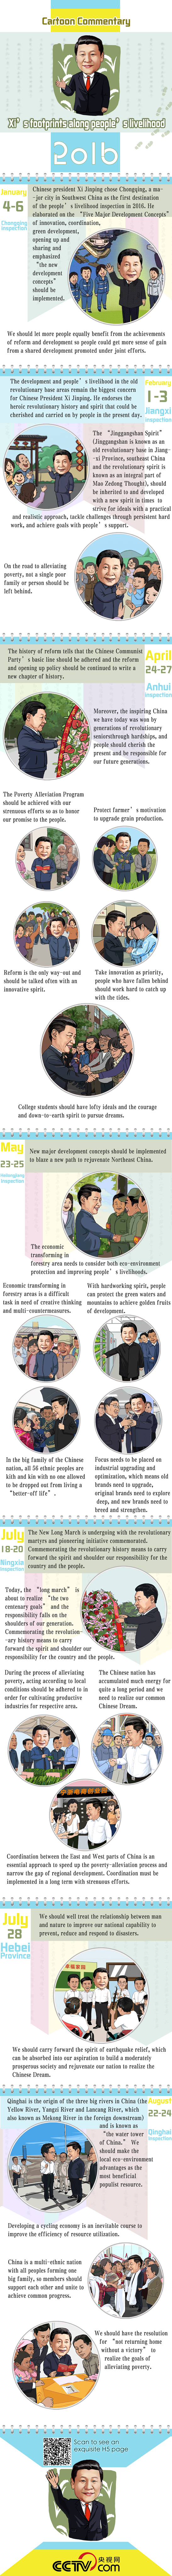 Xi's footprints along people's livelihood